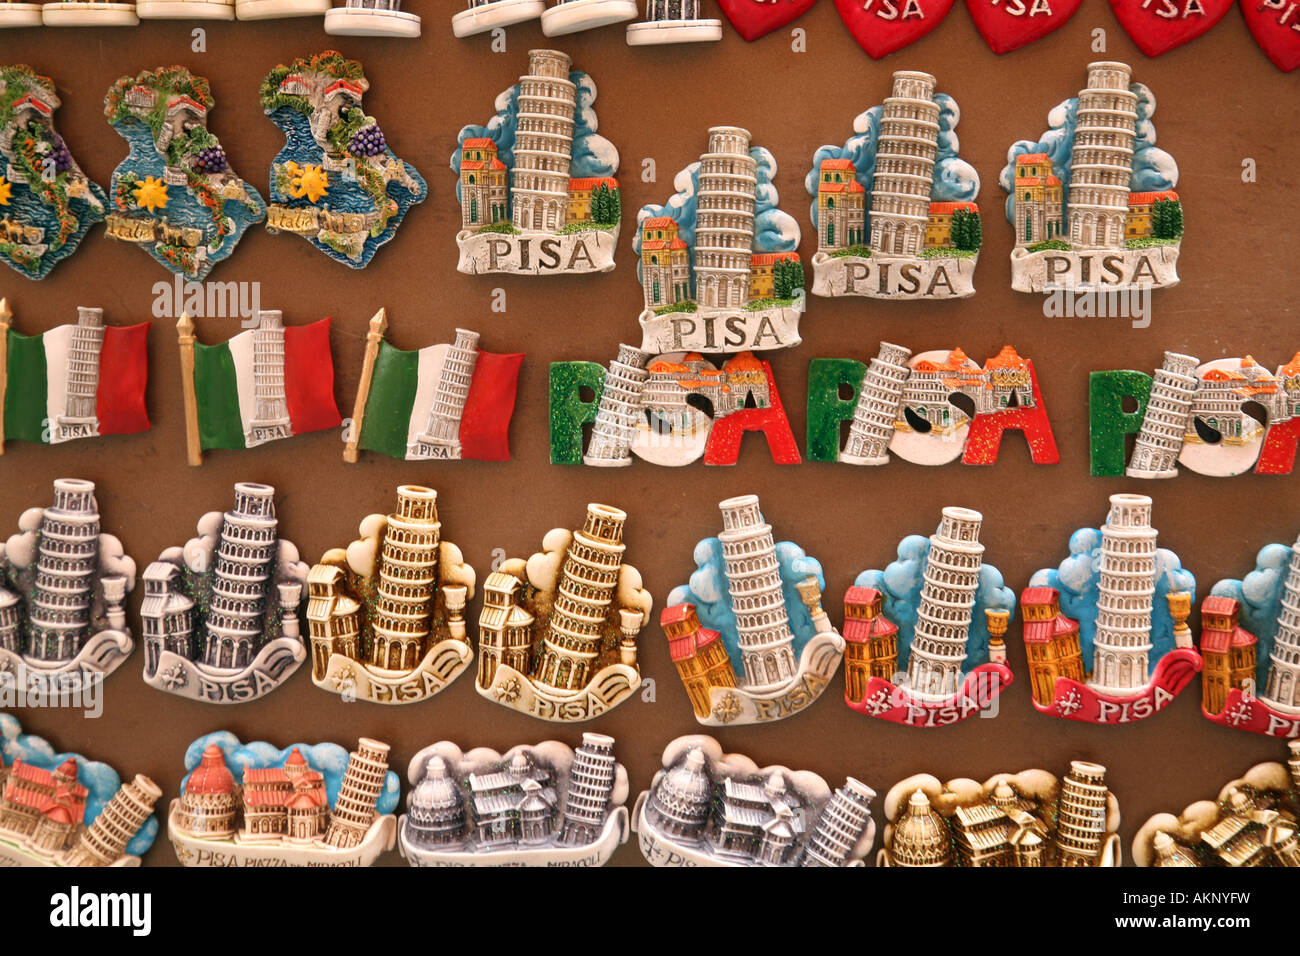 Fridge magnet souvenirs for sale, Pisa, Italy Europe Stock Photo - Alamy